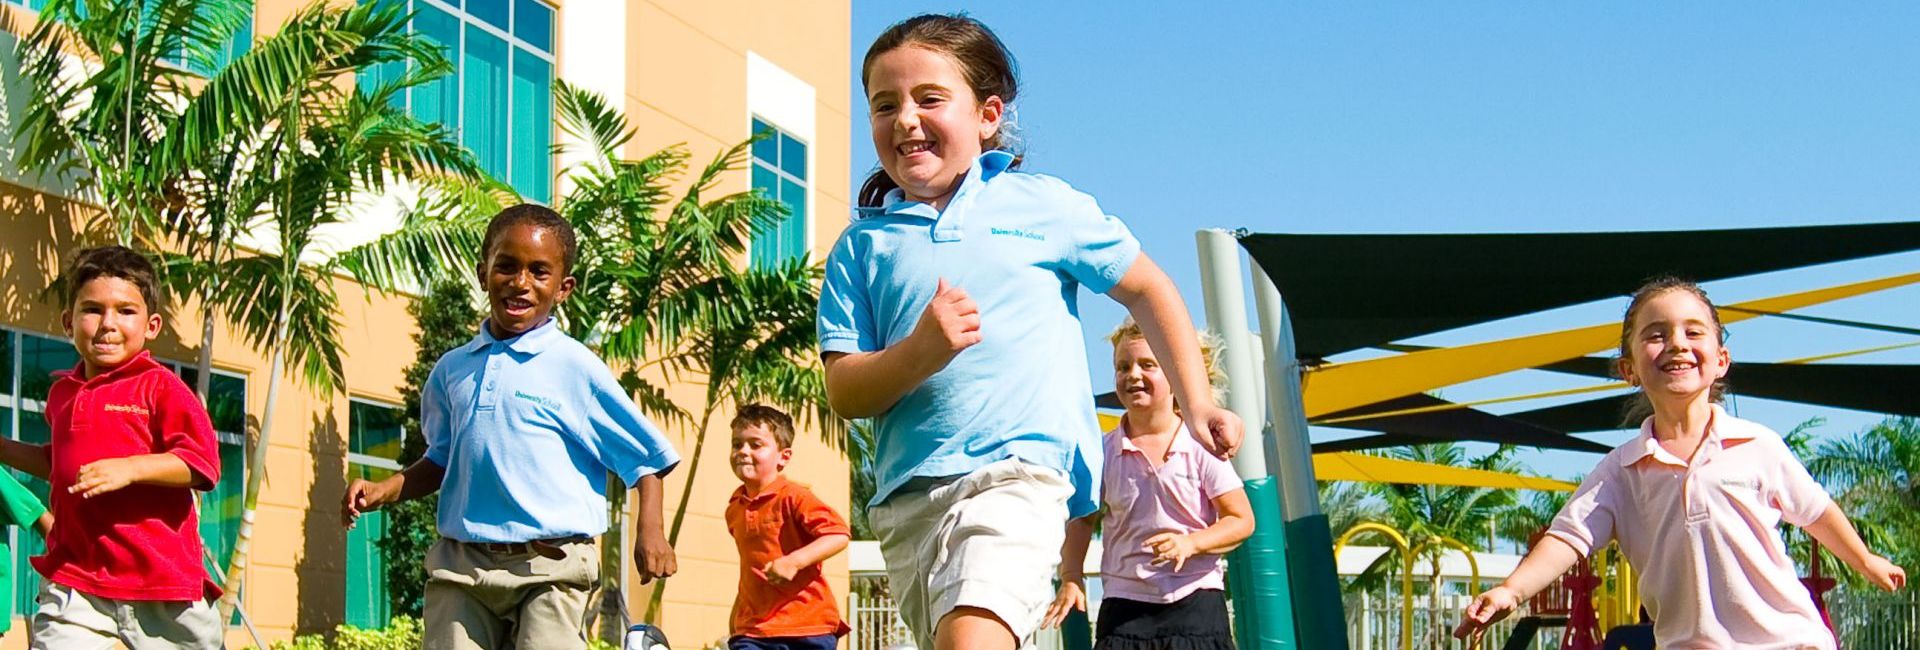 Group of children smiling running at playground